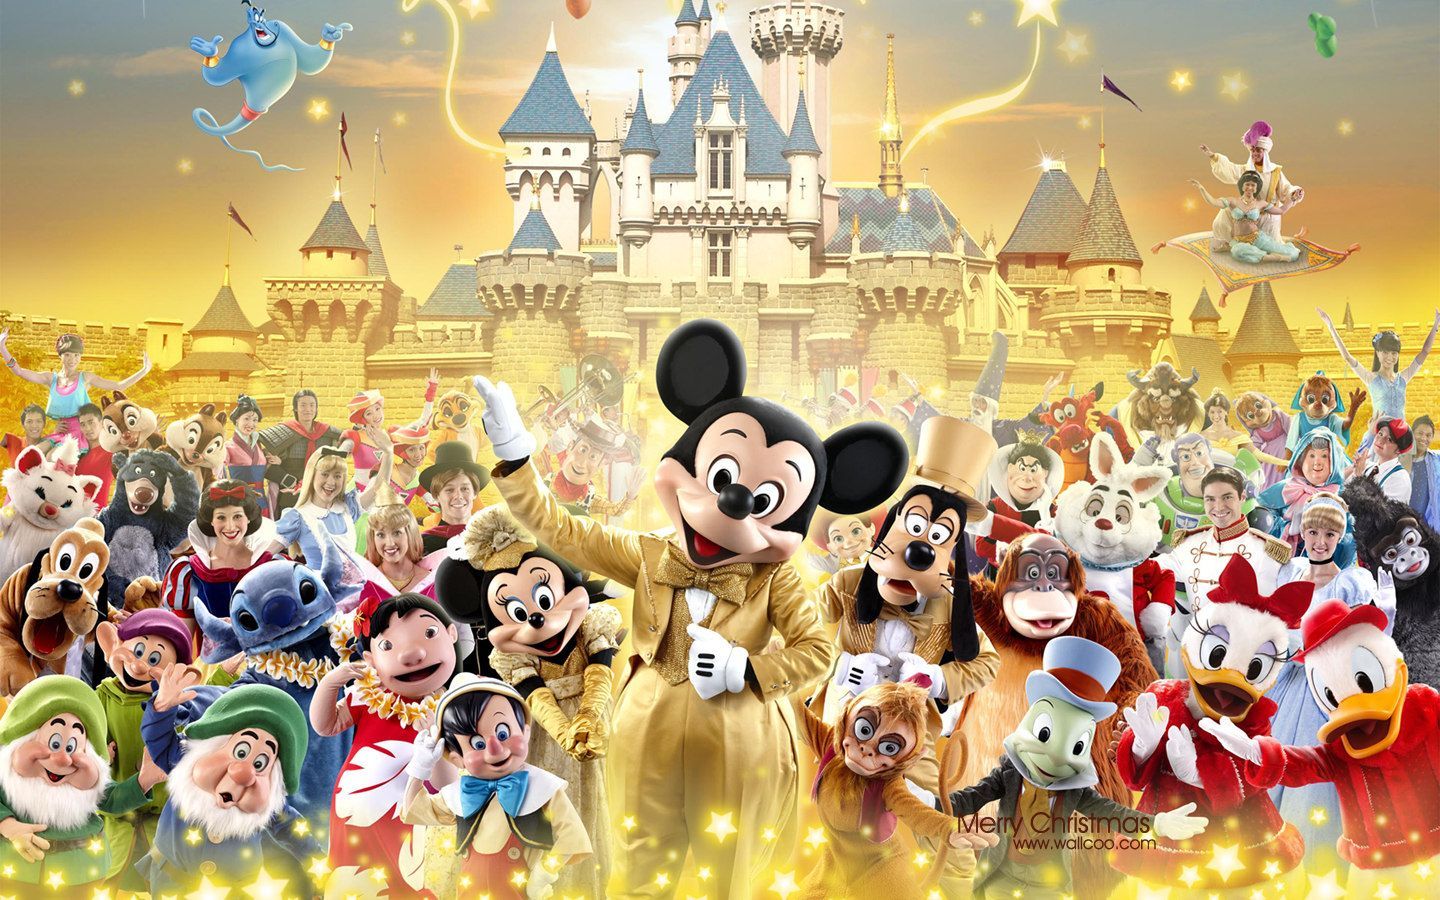 Hong Kong Disneyland's Christmas Wallpaper 28261. Disney characters wallpaper, Disney characters image, Disney characters picture